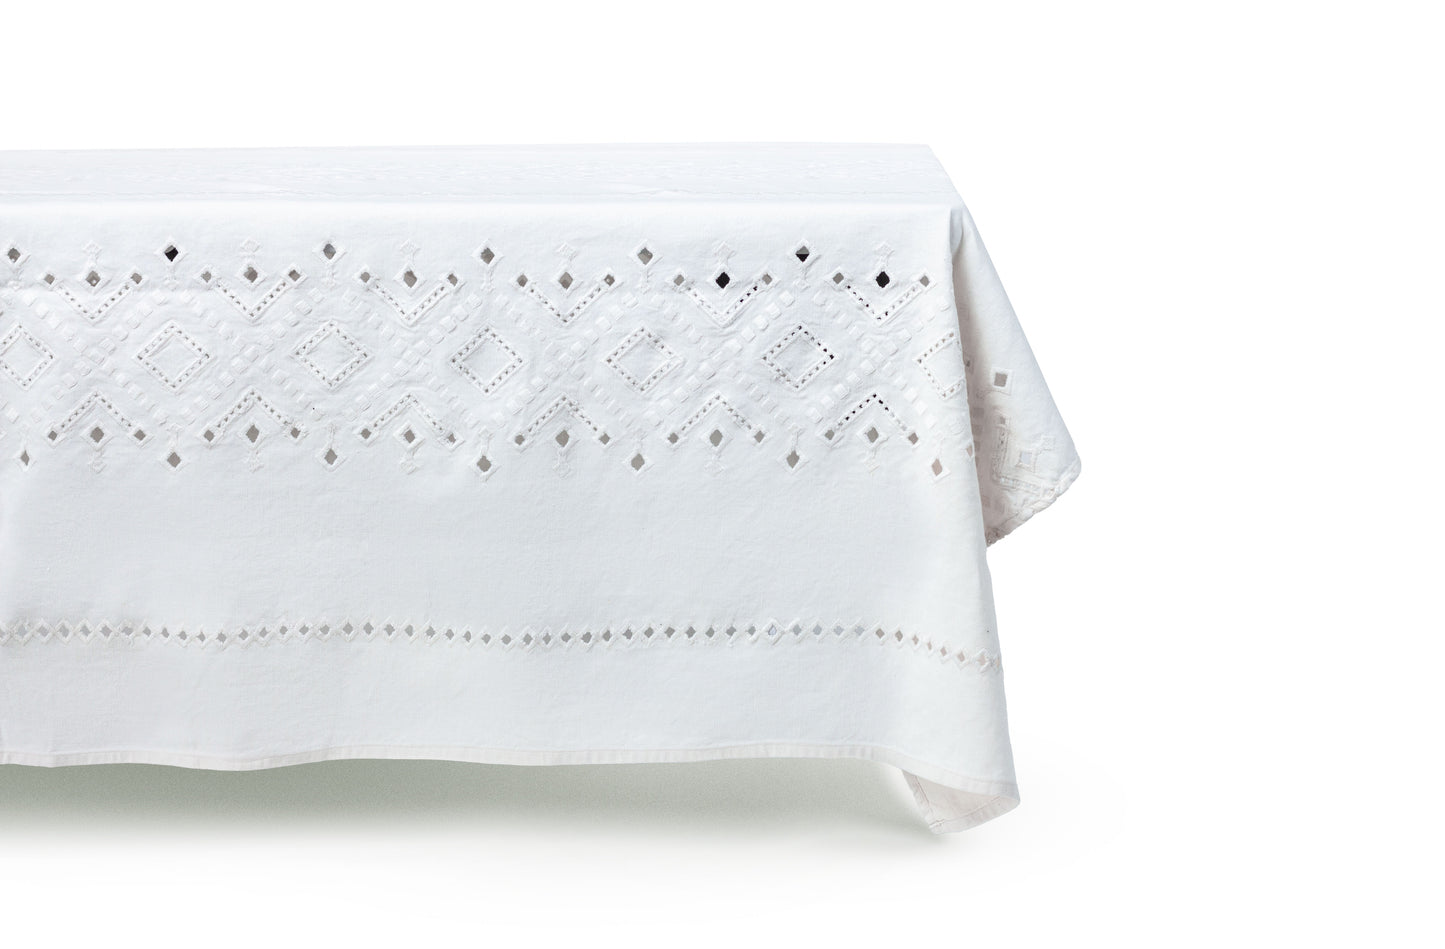 Ojete White Rectangular Tablecloth for 6